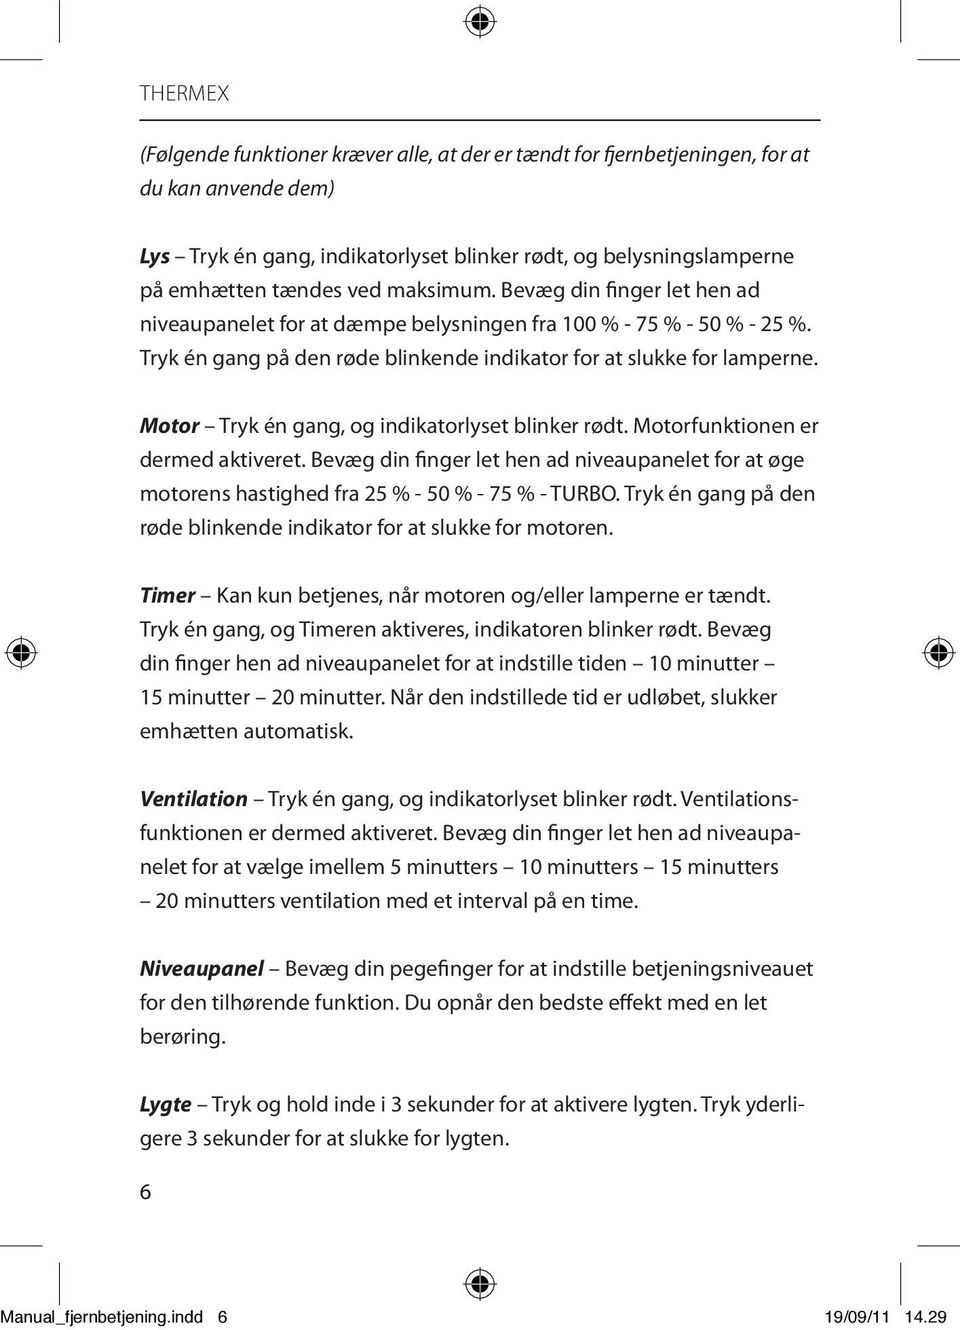 Thermex Fjernbetjening - PDF Gratis download